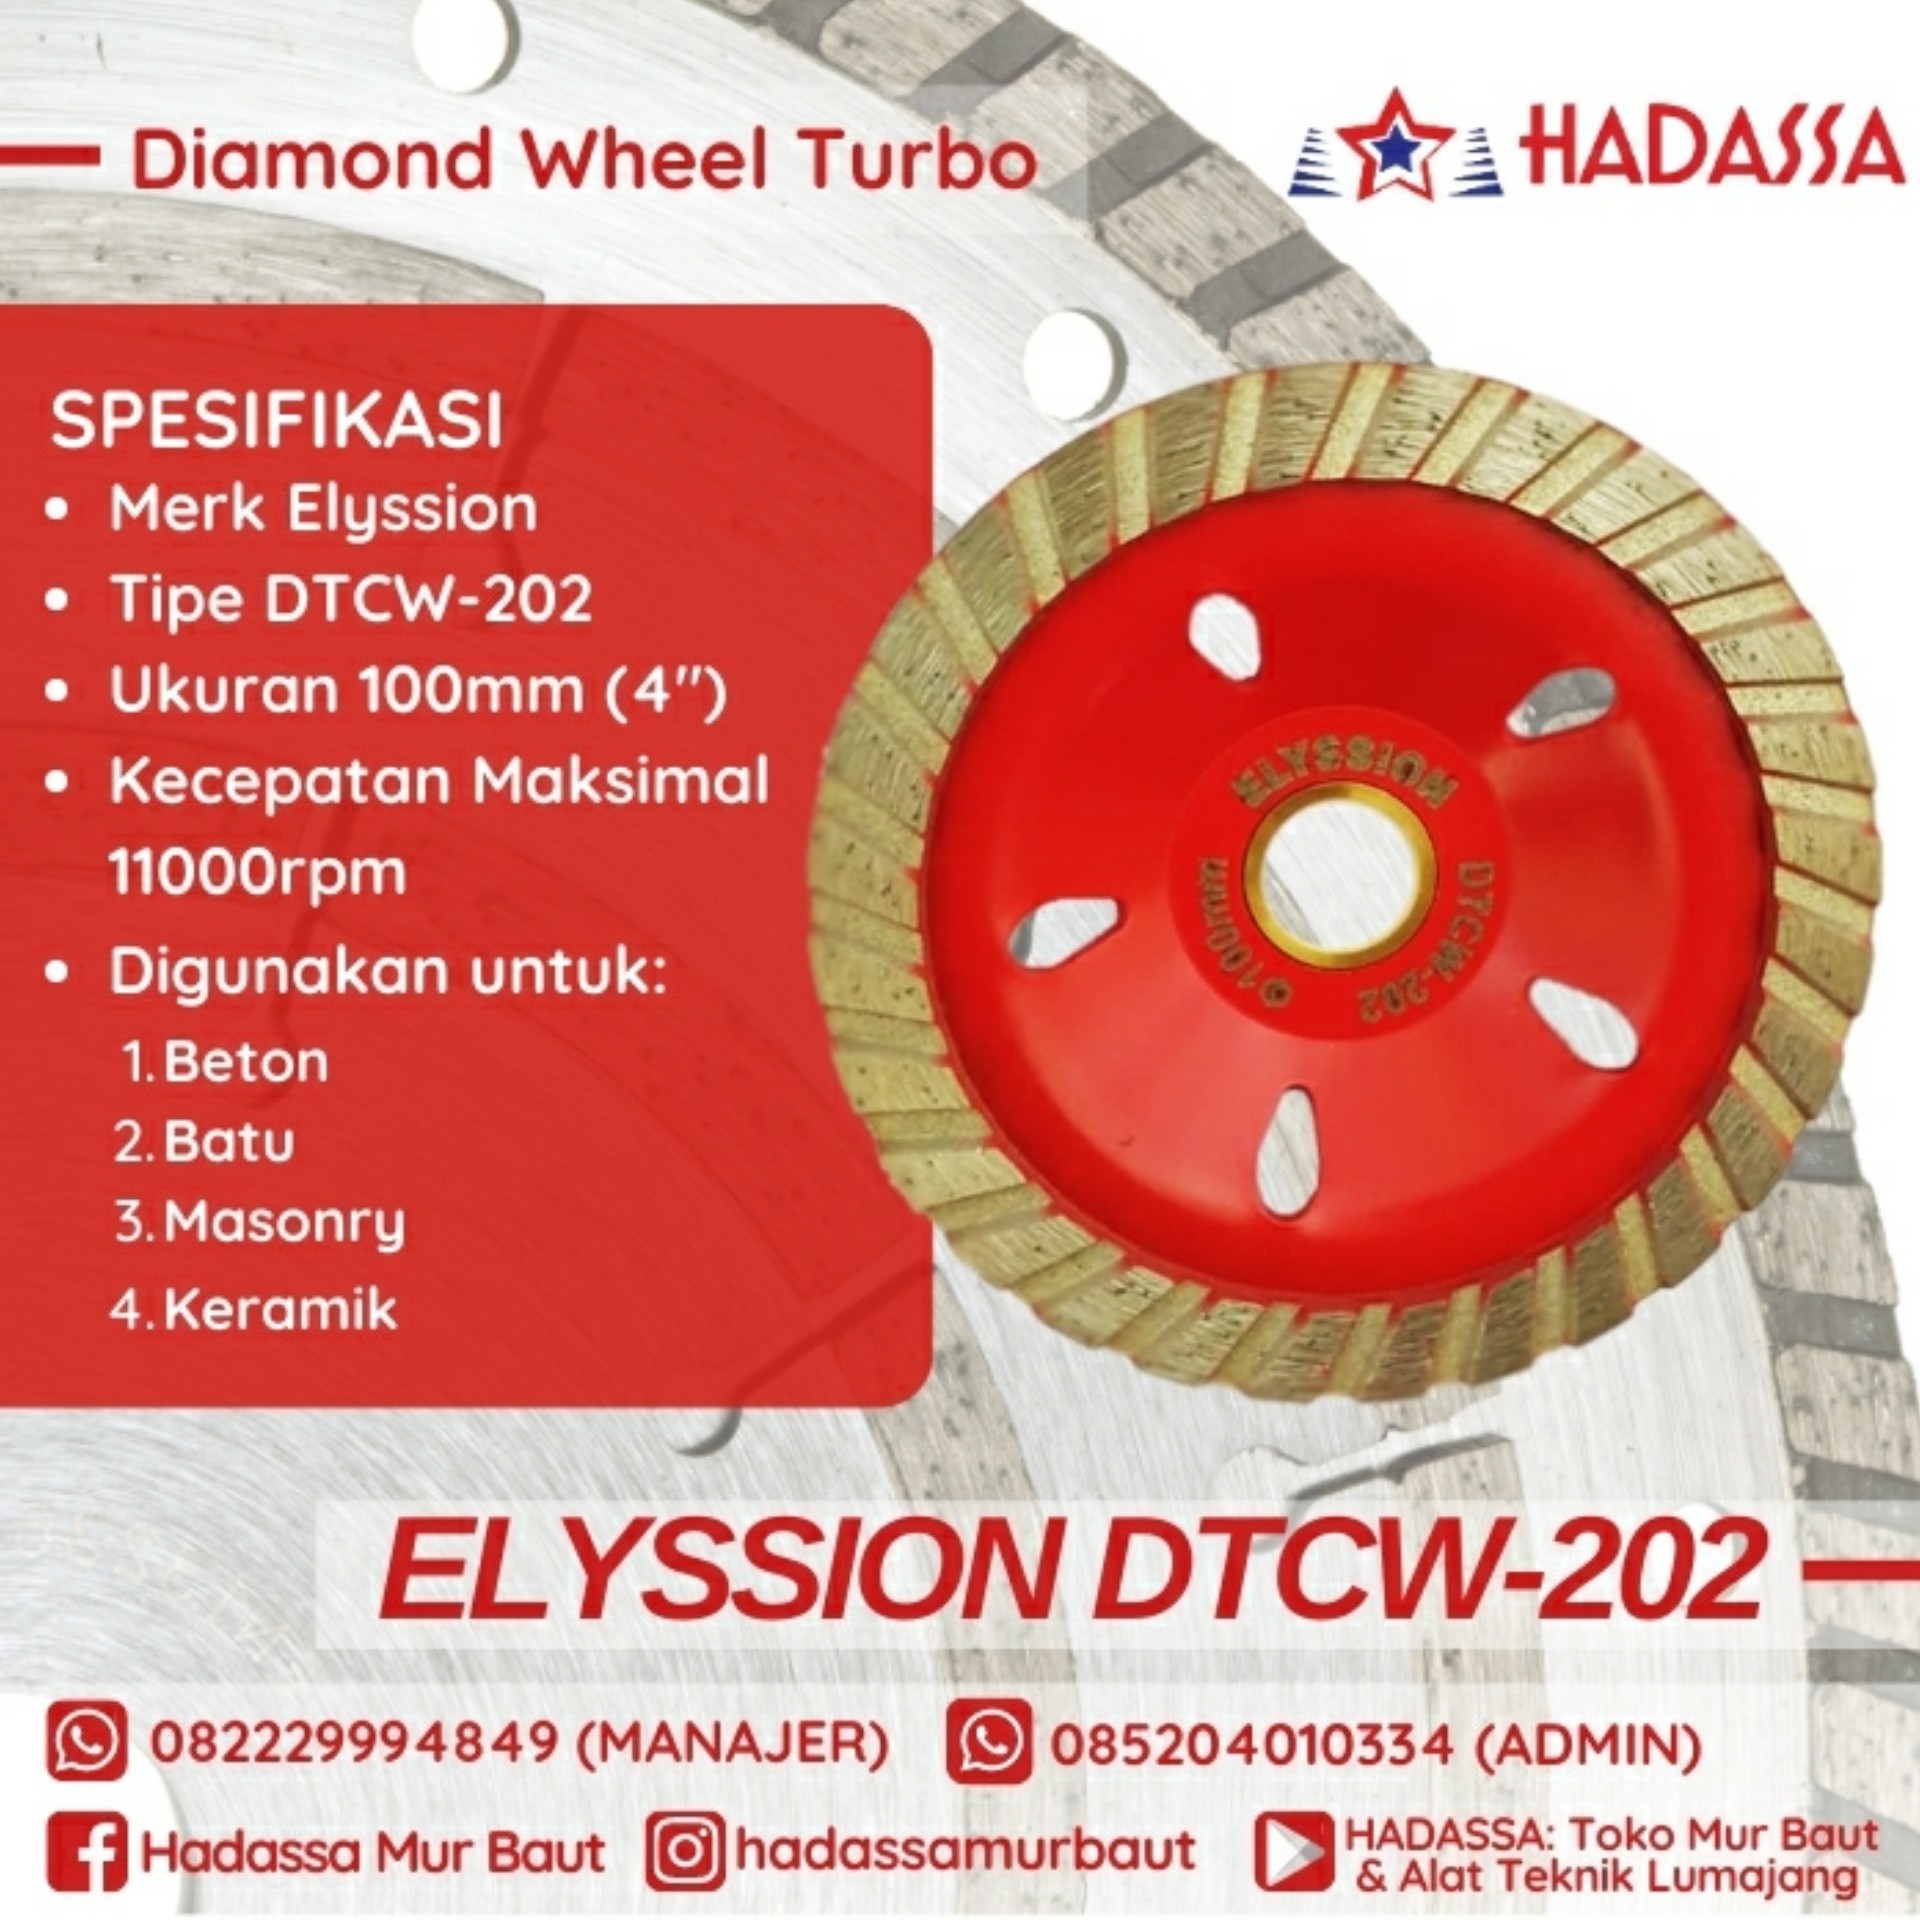 Diamond Wheel Turbo Elyssion DTCW-202